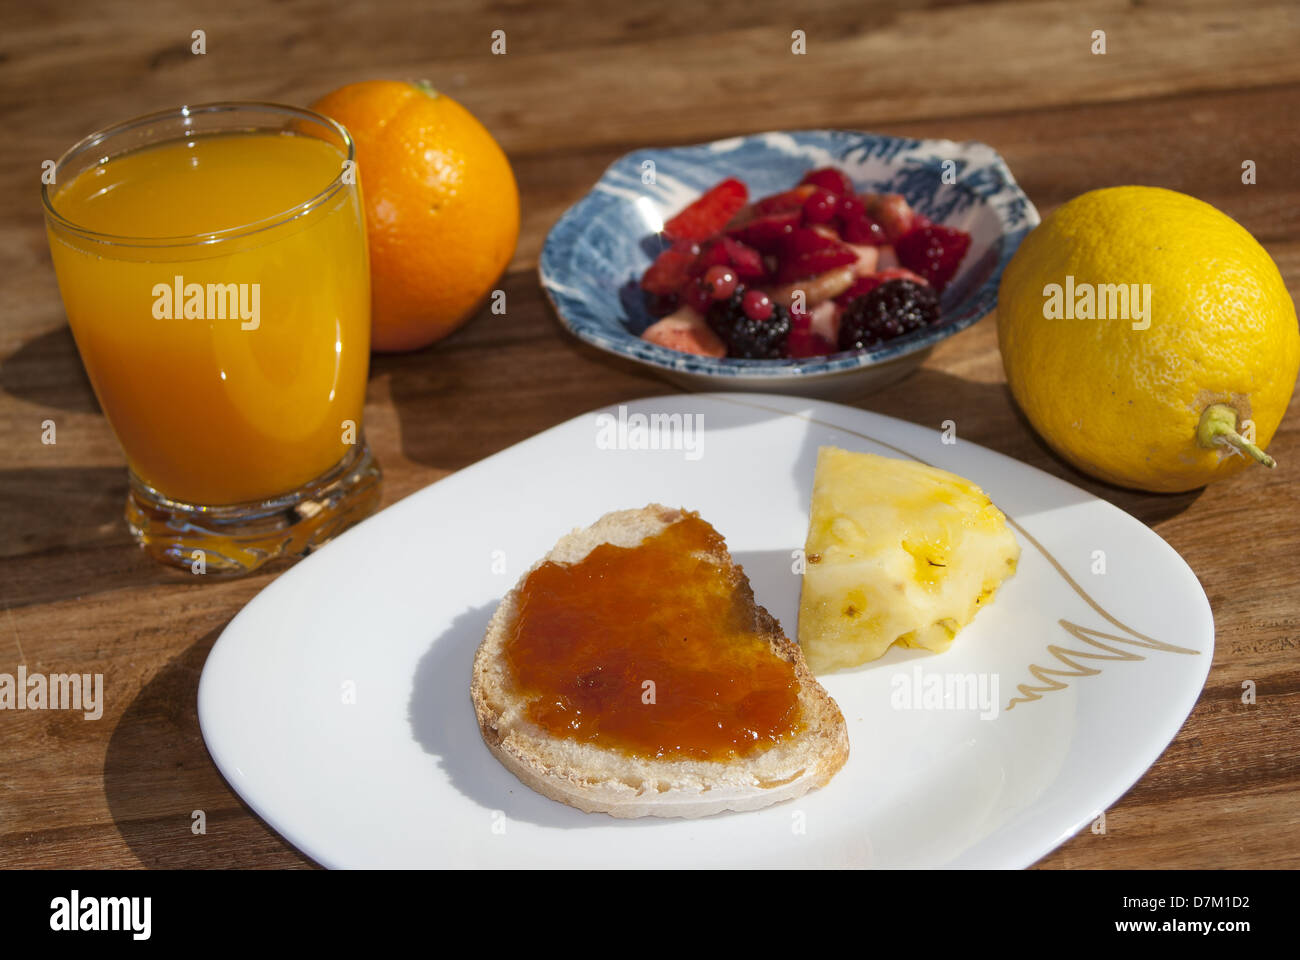 Italian breakfast with fresh fruit and marmalade Stock Photo